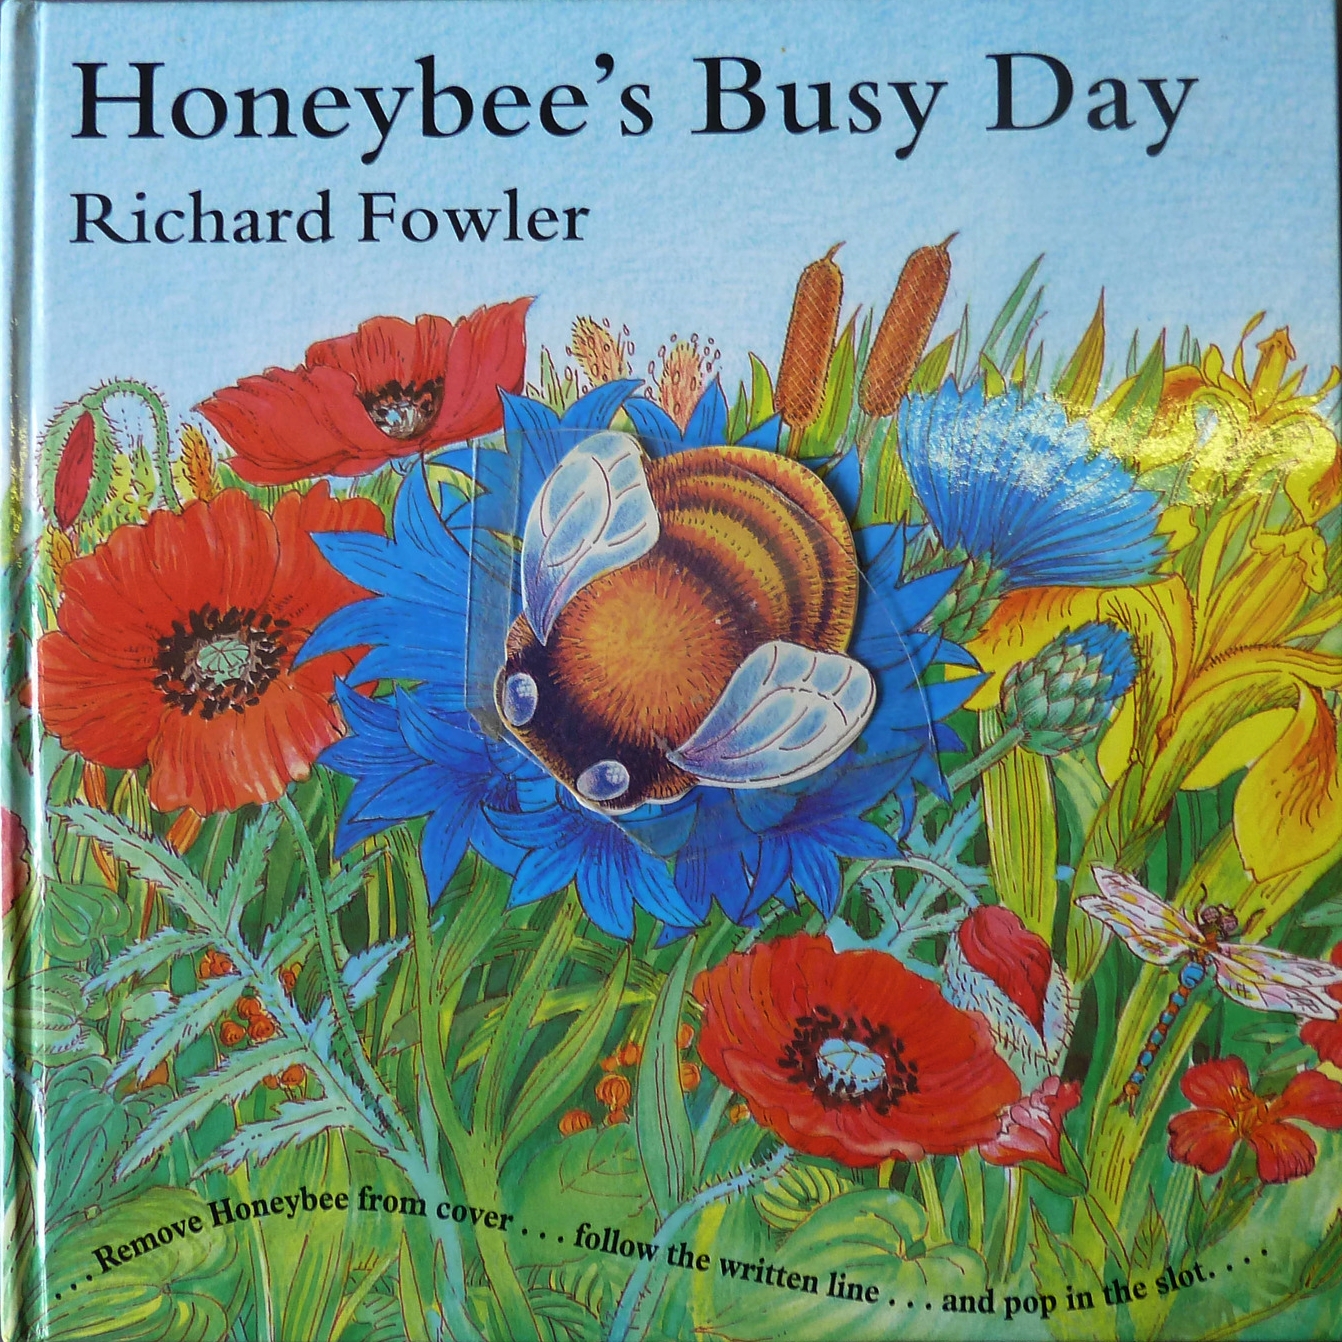 Honeybee's Busy Day